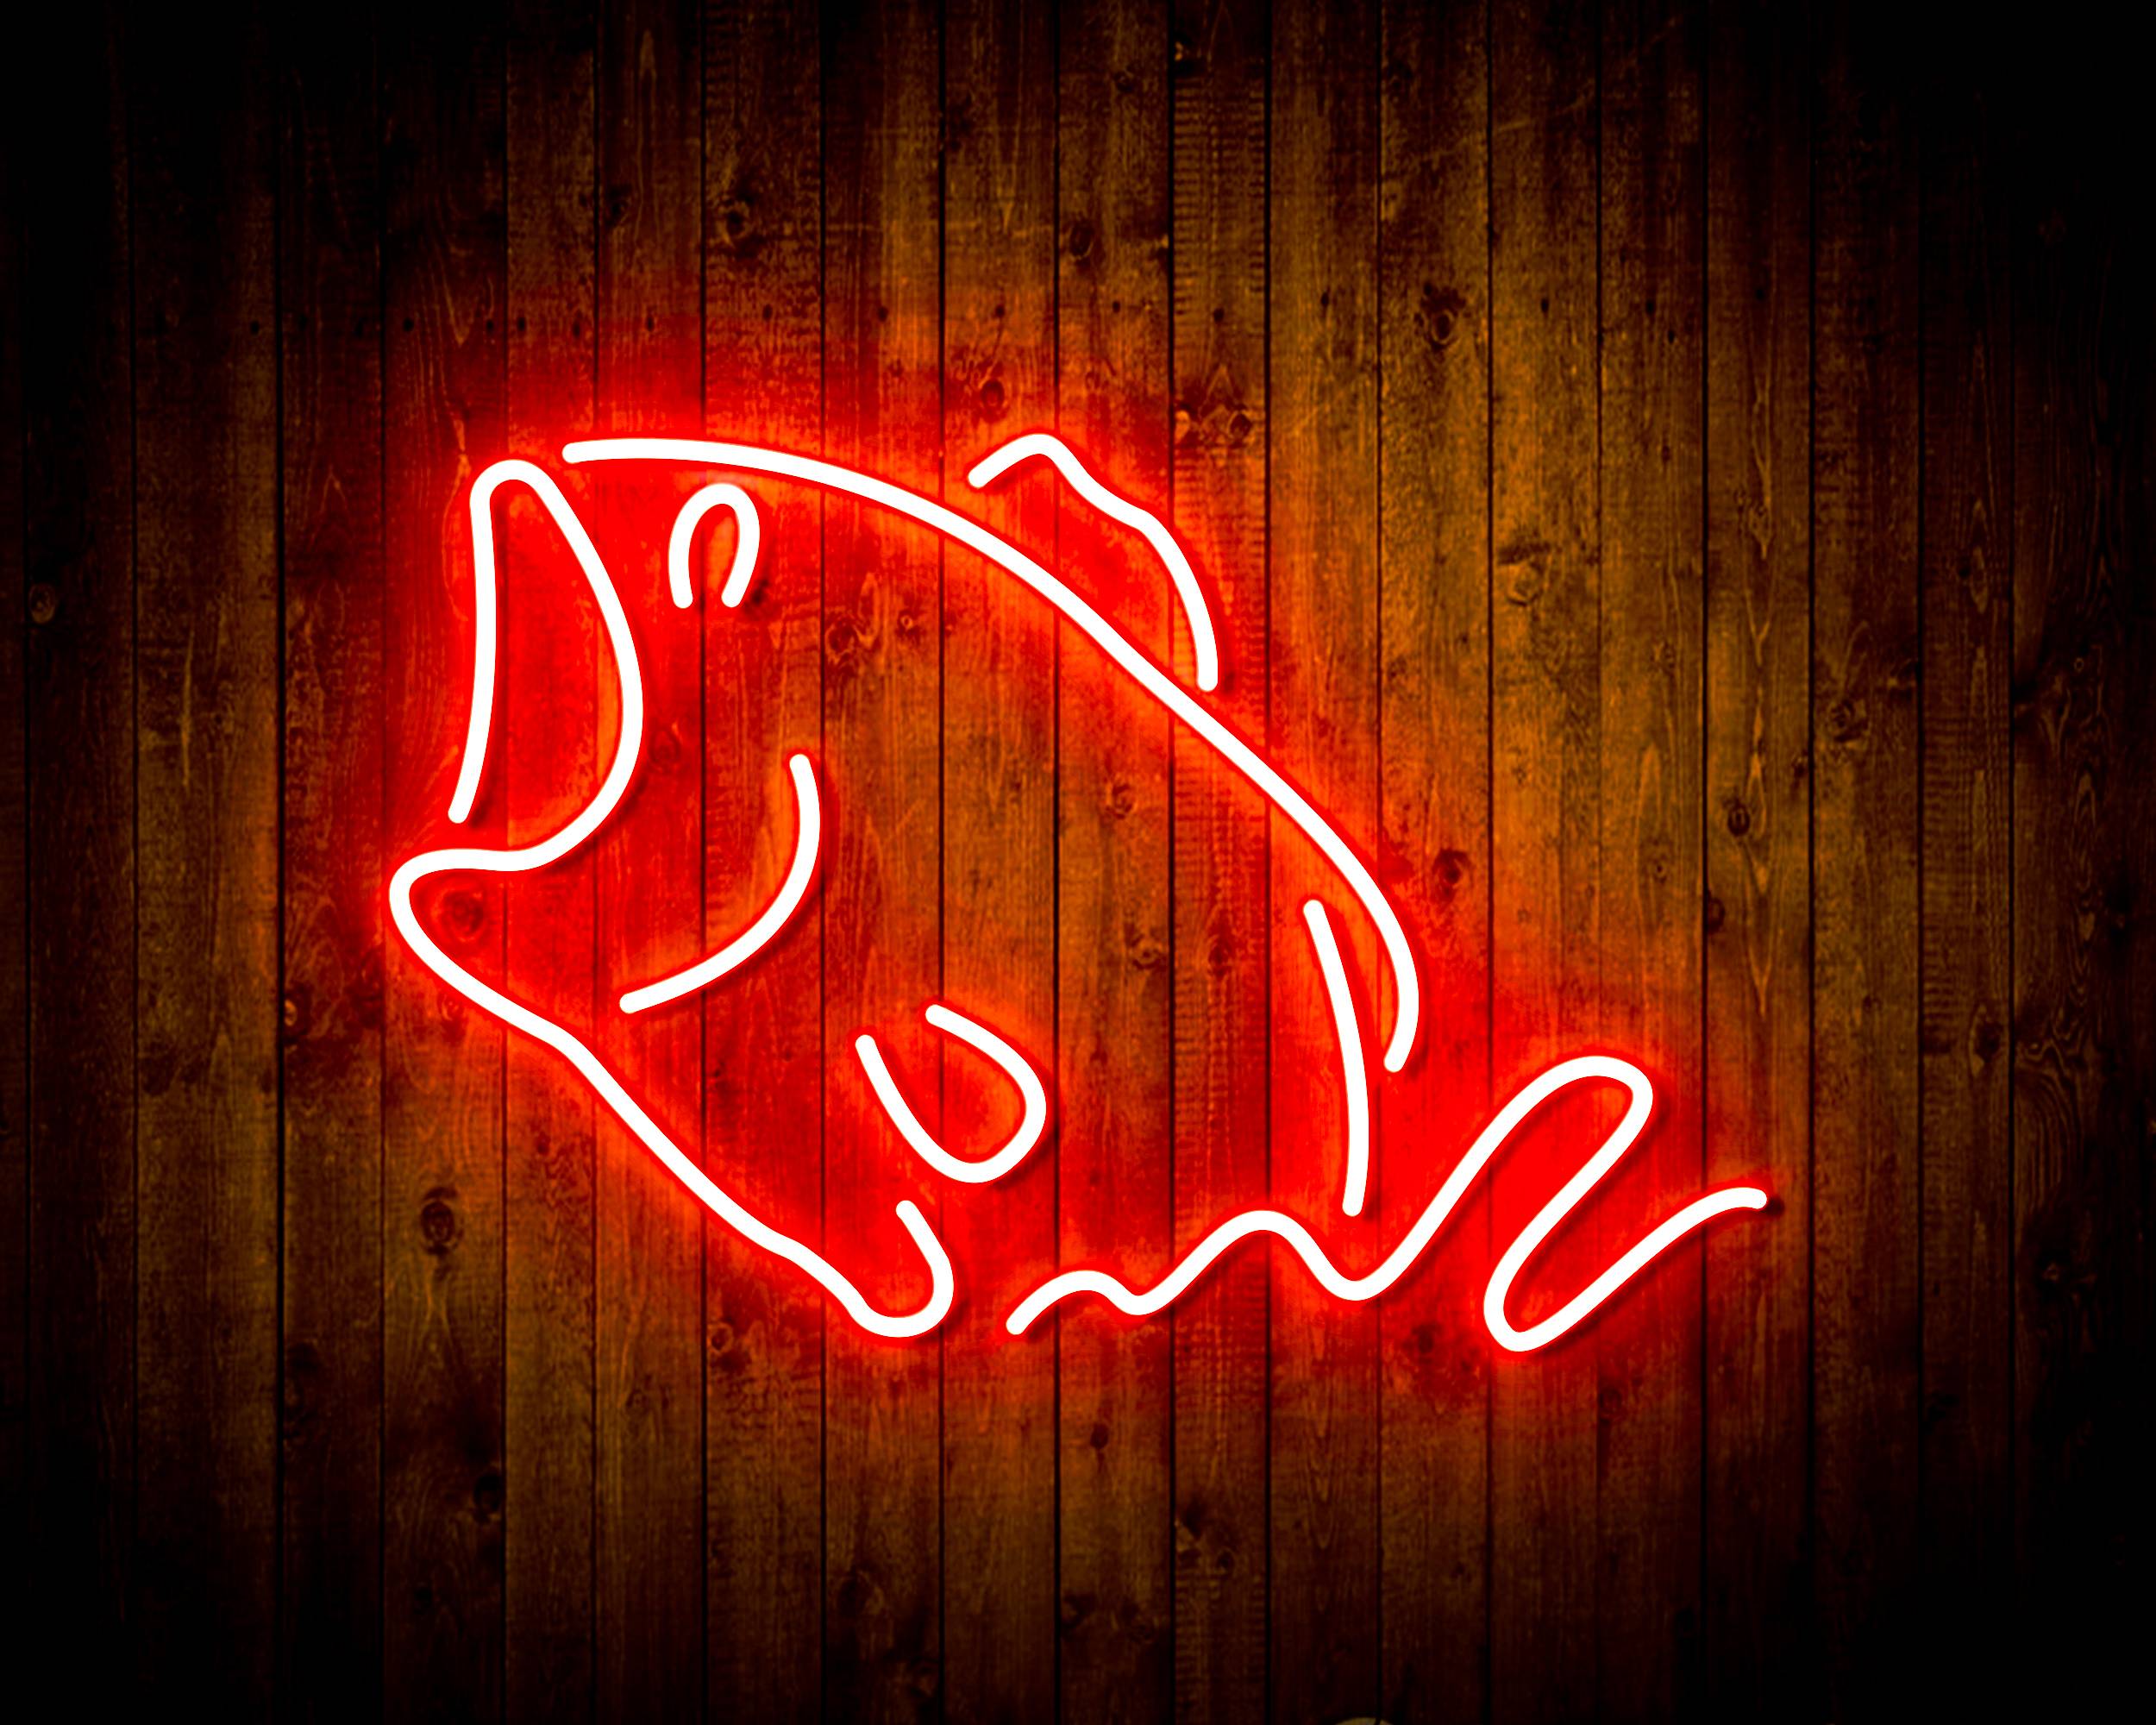 Fish for Busch Handmade Neon Flex LED Sign